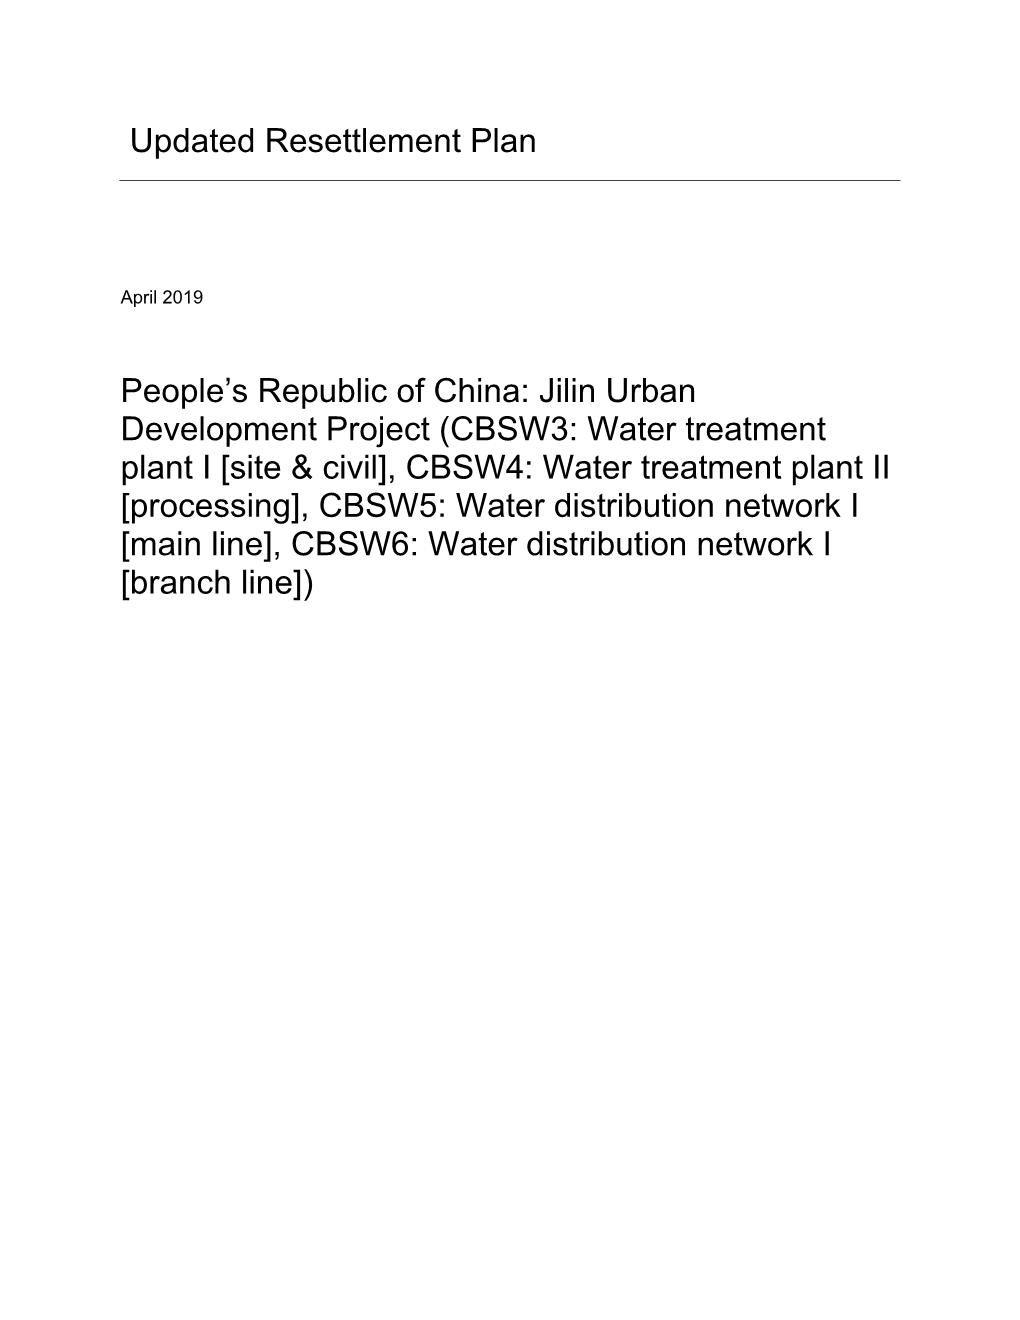 Jilin Urban Development Project: CBSW3, CBSW4, CBSW5, And